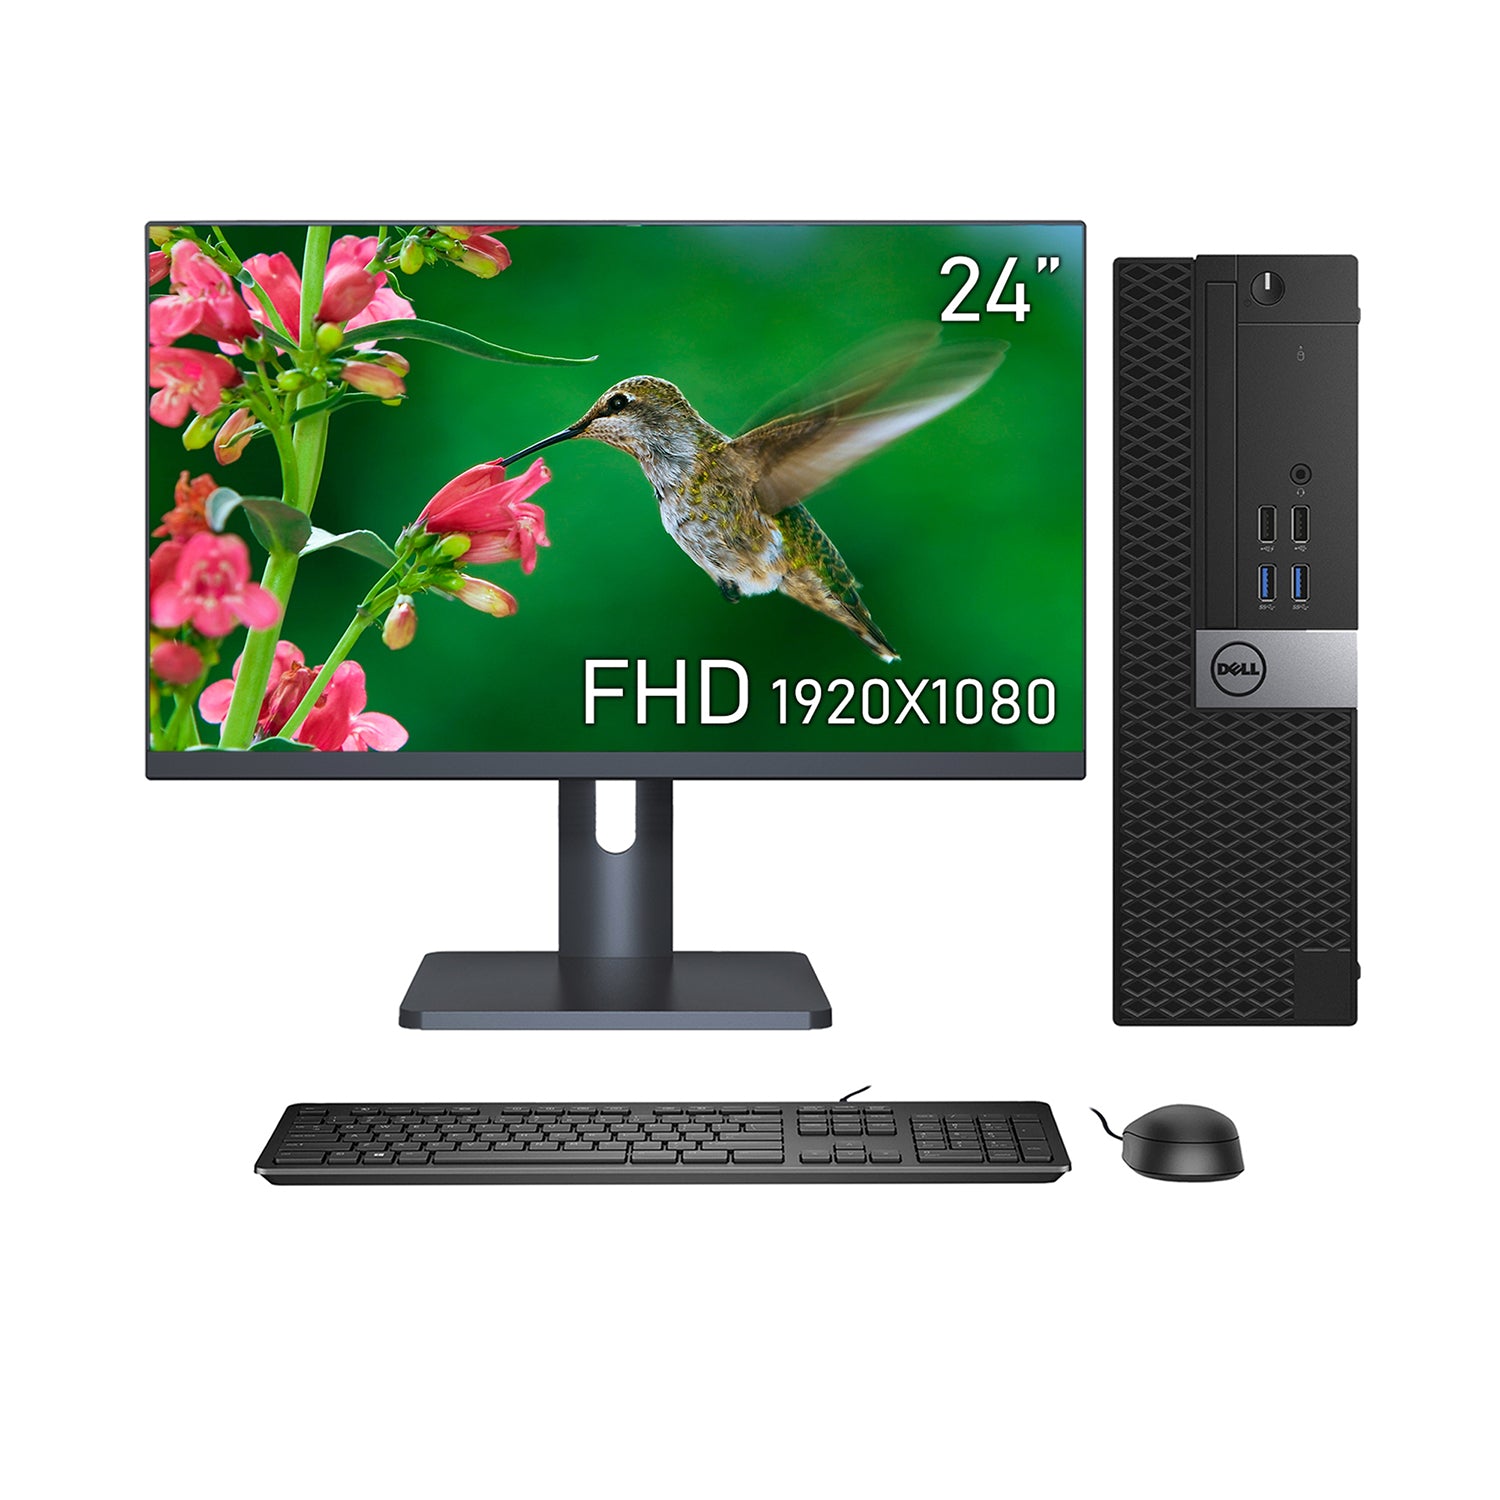 Dell Computer OptiPlex SFF Desktop PC| Intel Core i5 up to 3.60 GHz Processor| 16GB - 32GB DDR4 RAM| 256GB -2TB SSD| Windows 10 Pro| New 24 inch FHD Monitor| HDMI| WIFI - Refurbished